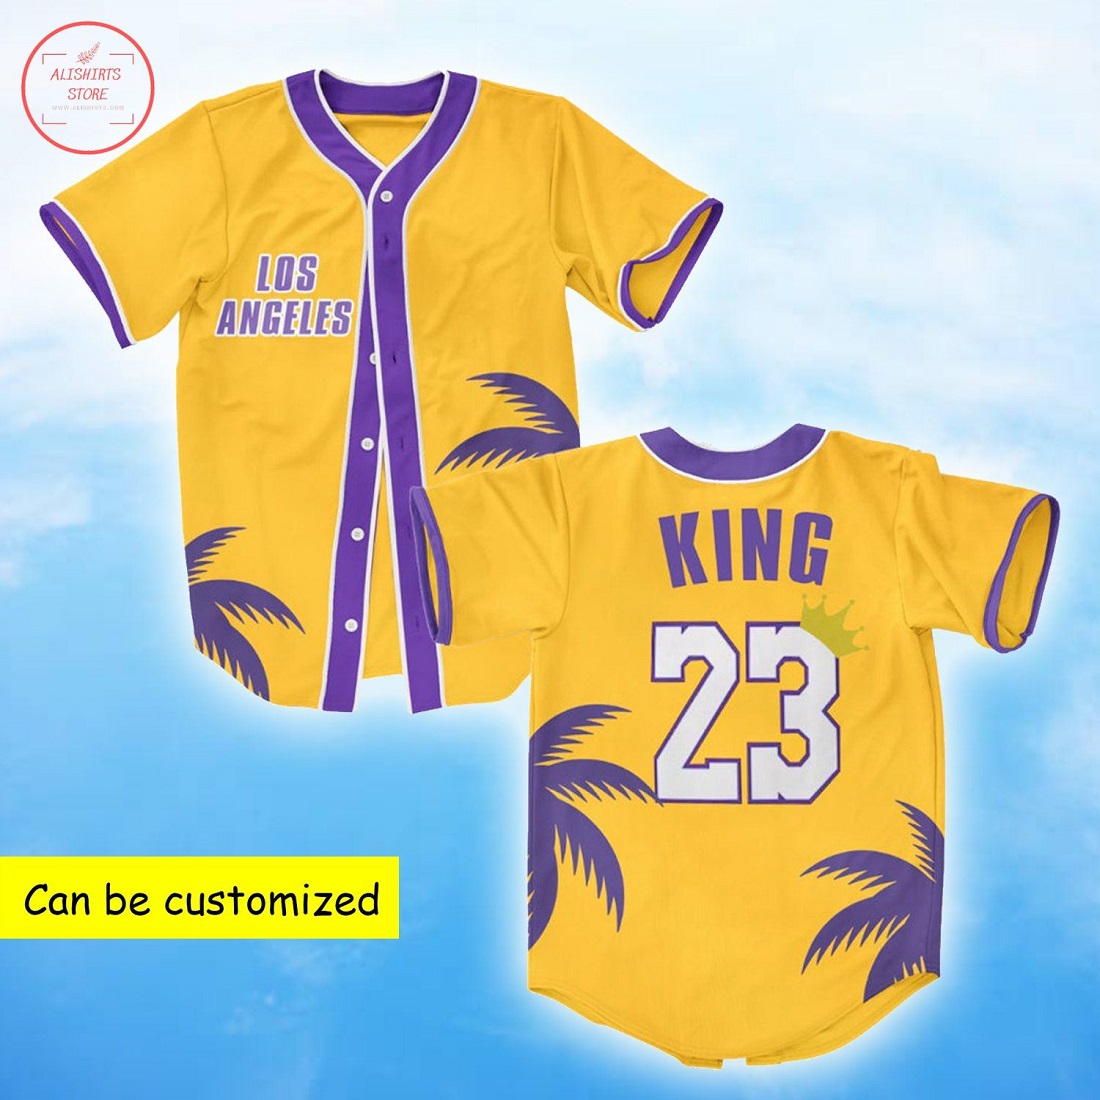 King 23 Of Los Angeles Baseball Jersey